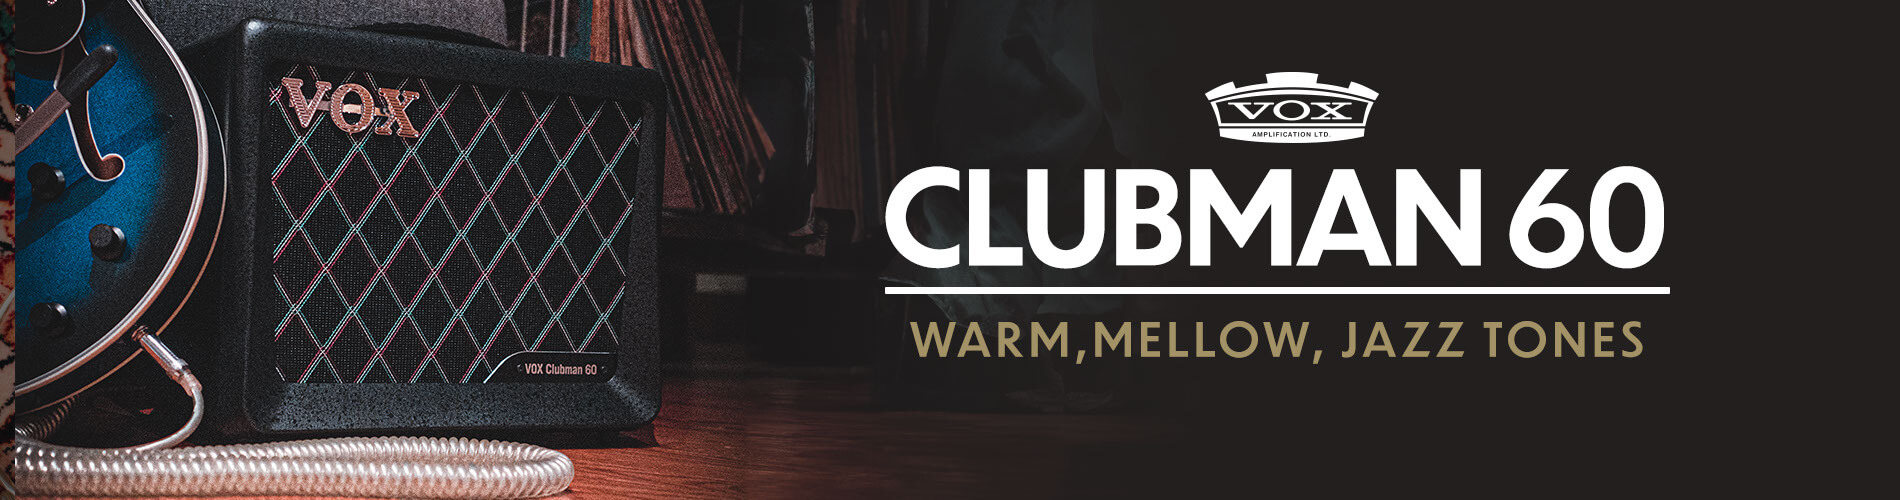 VOX Clubman 60 amp - warm, mellow, jazz tones